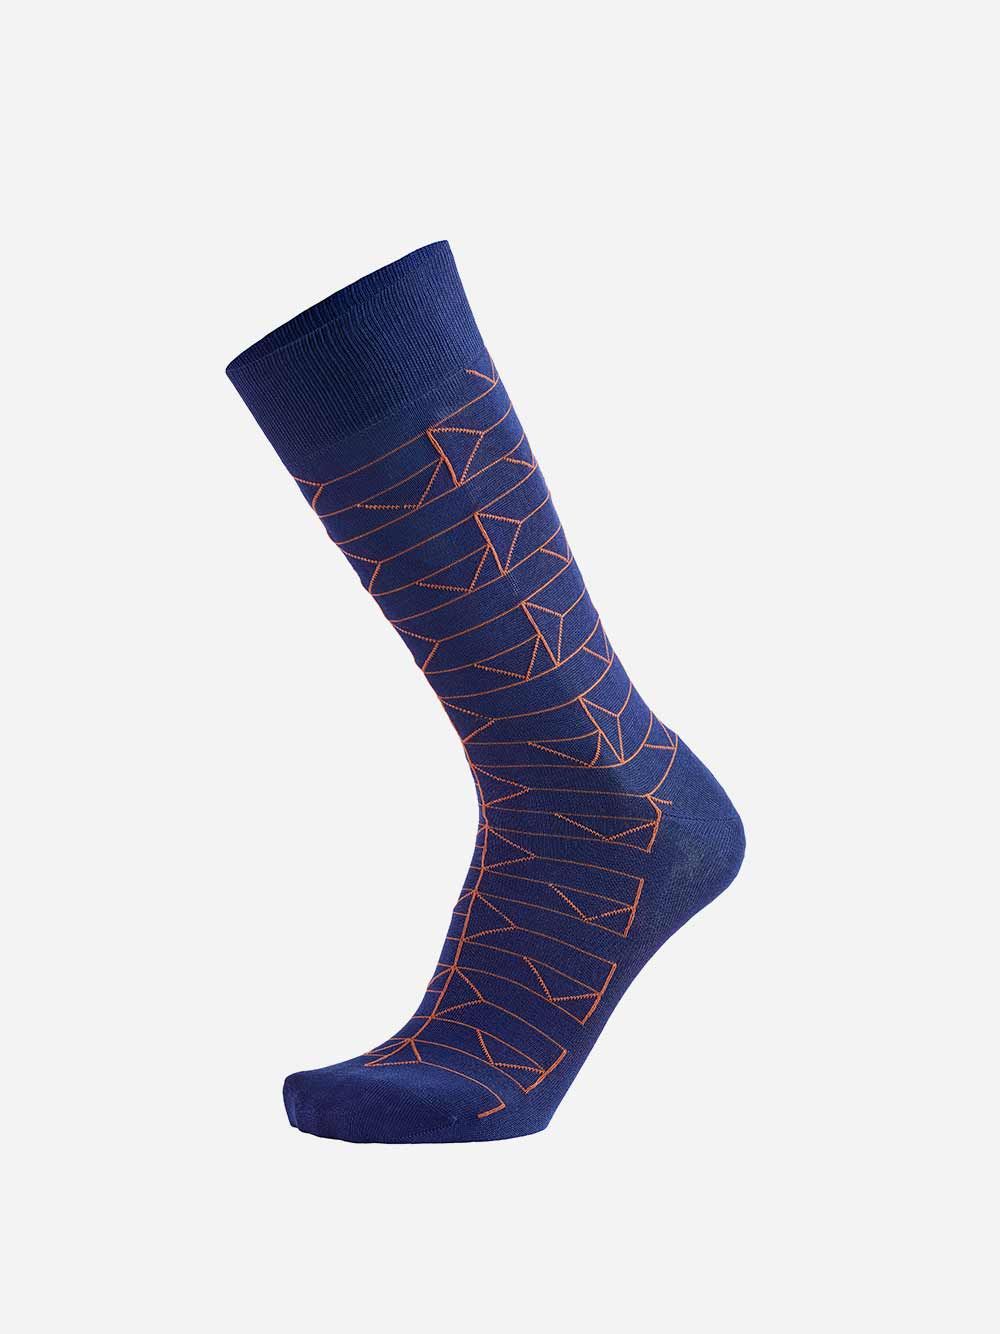 Geometric Blue Socks | Westmister